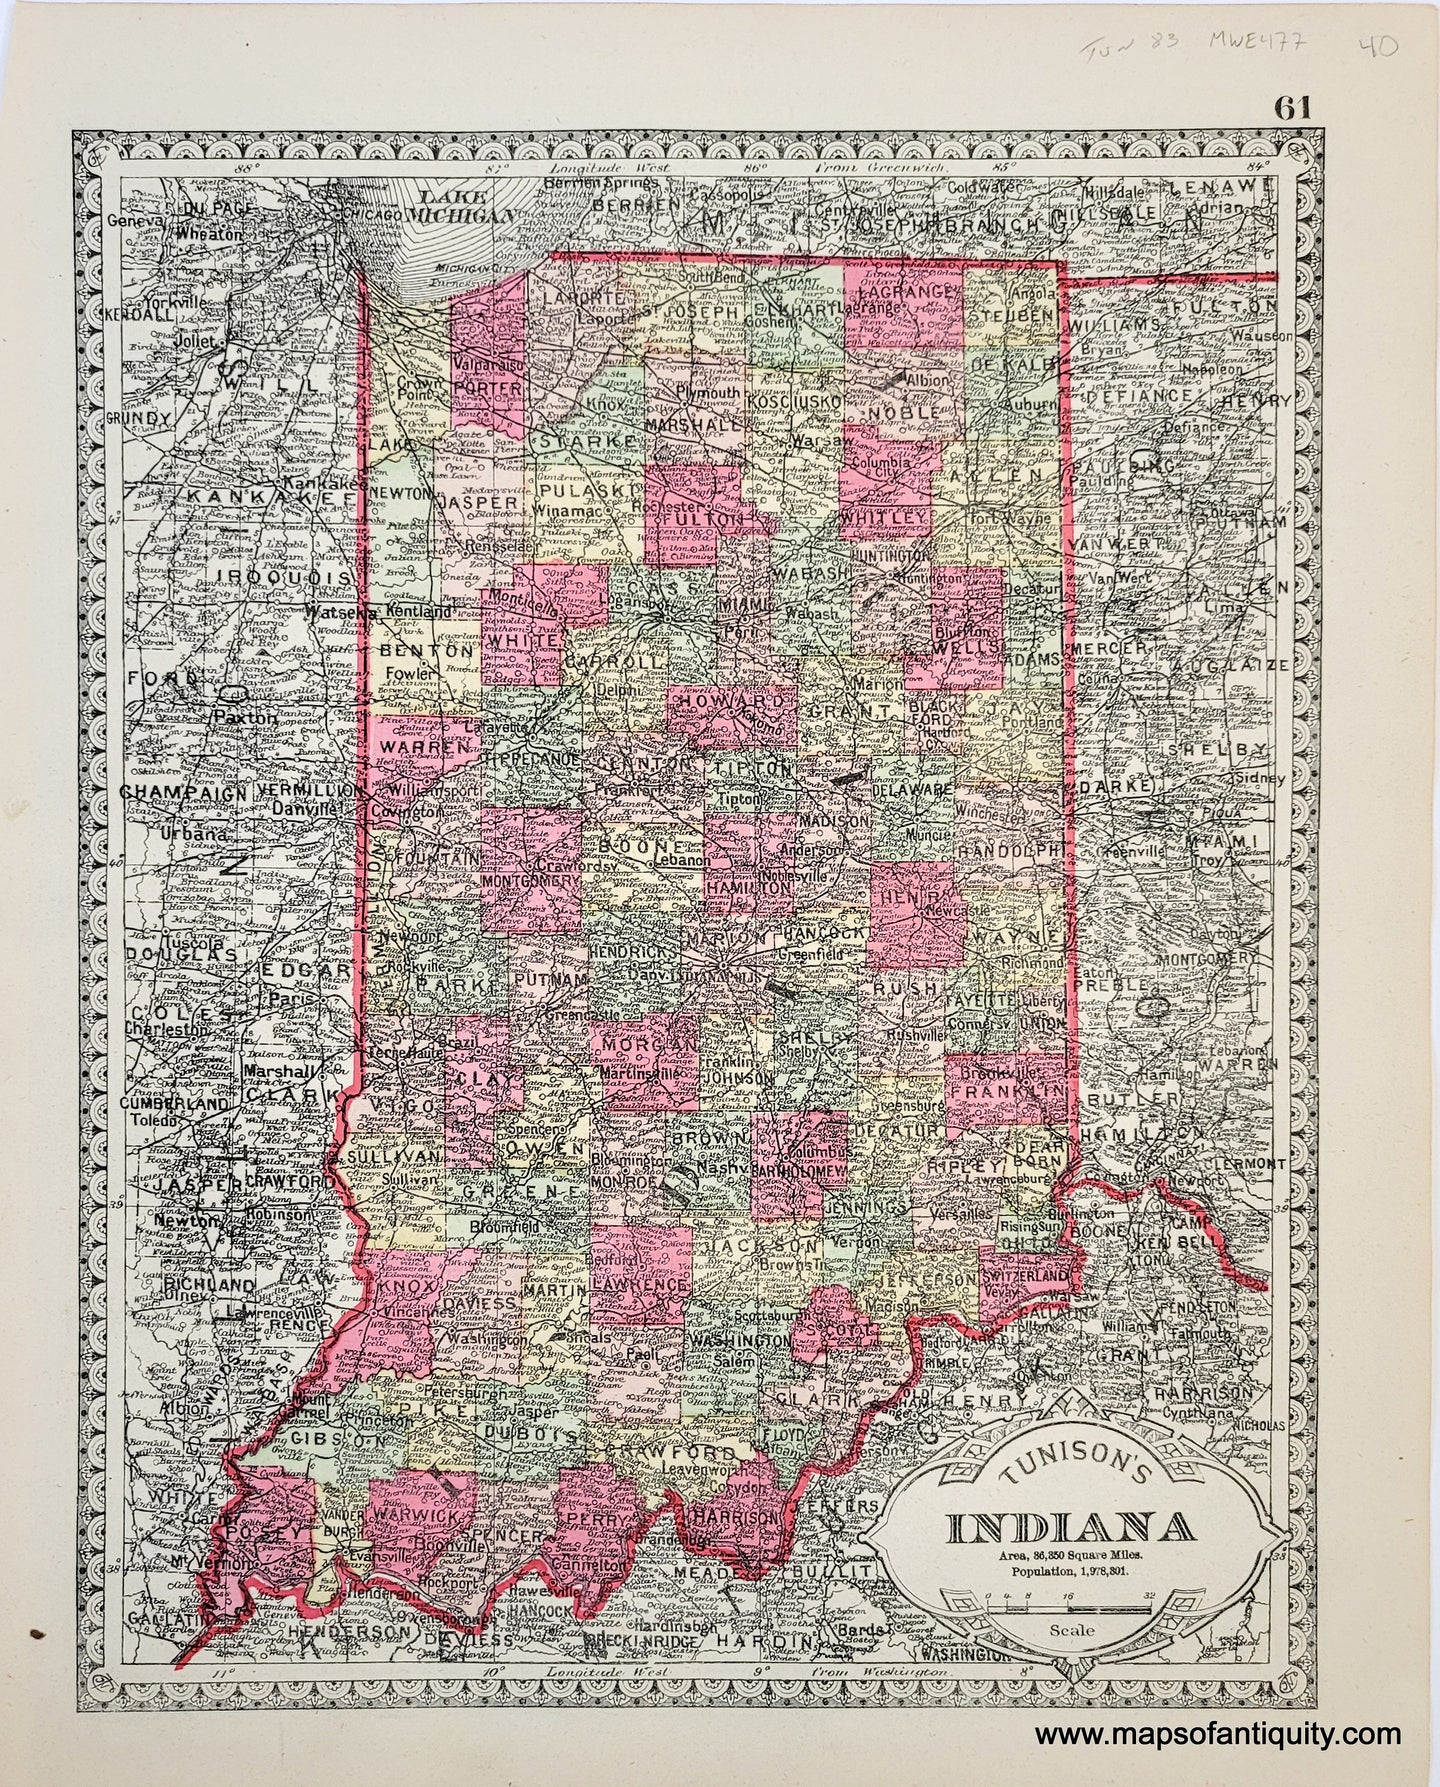 MWE477-Antique-Map-Tunisons-Indiana-verso-Tunisons-Michigan-United-States-1888-Tunison-Maps-Of-Antiquity-1800s-19th-century